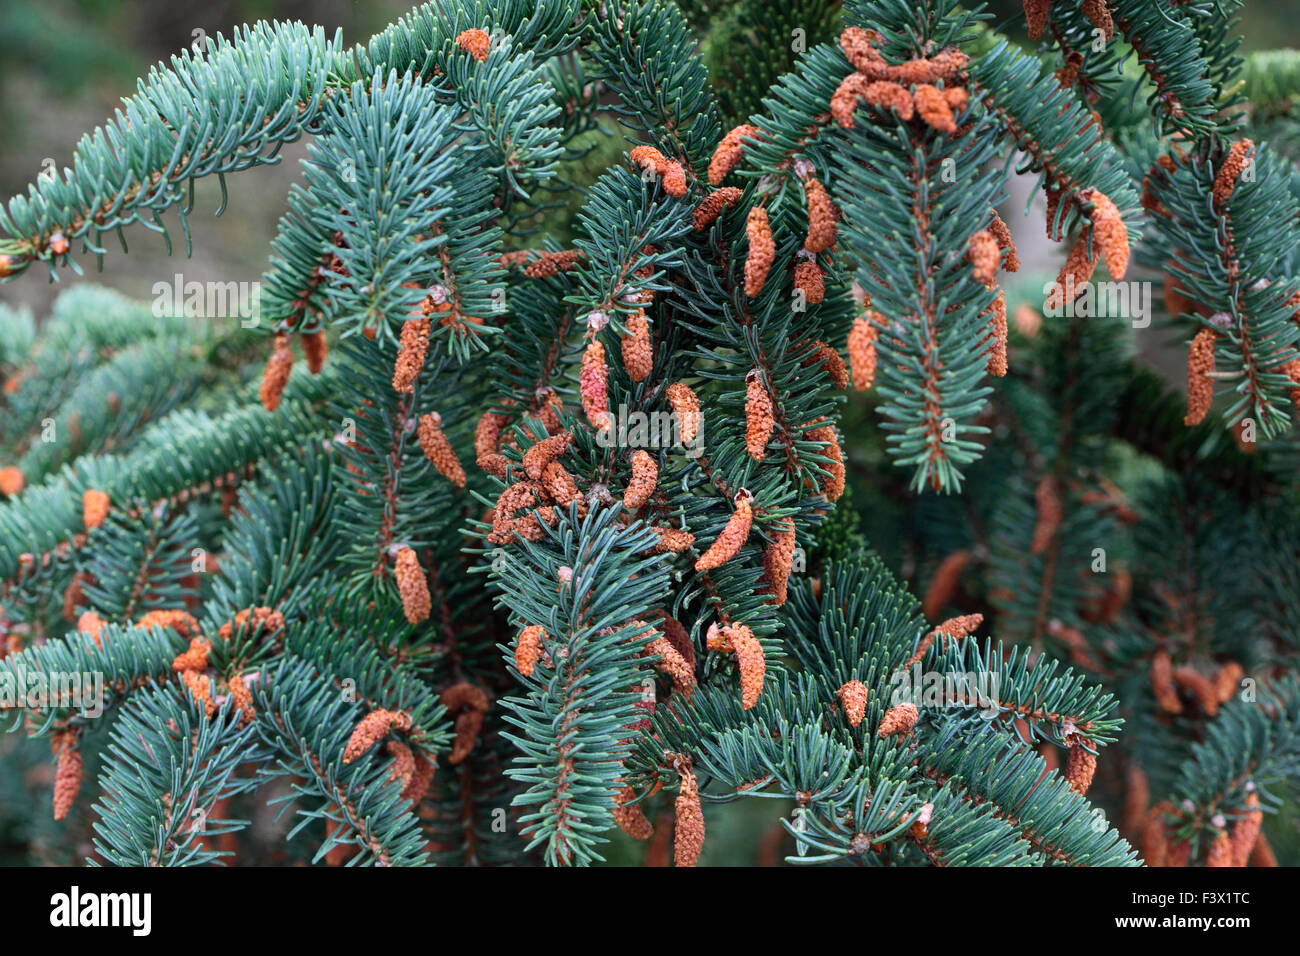 Picea koyamae tree with cones Stock Photo